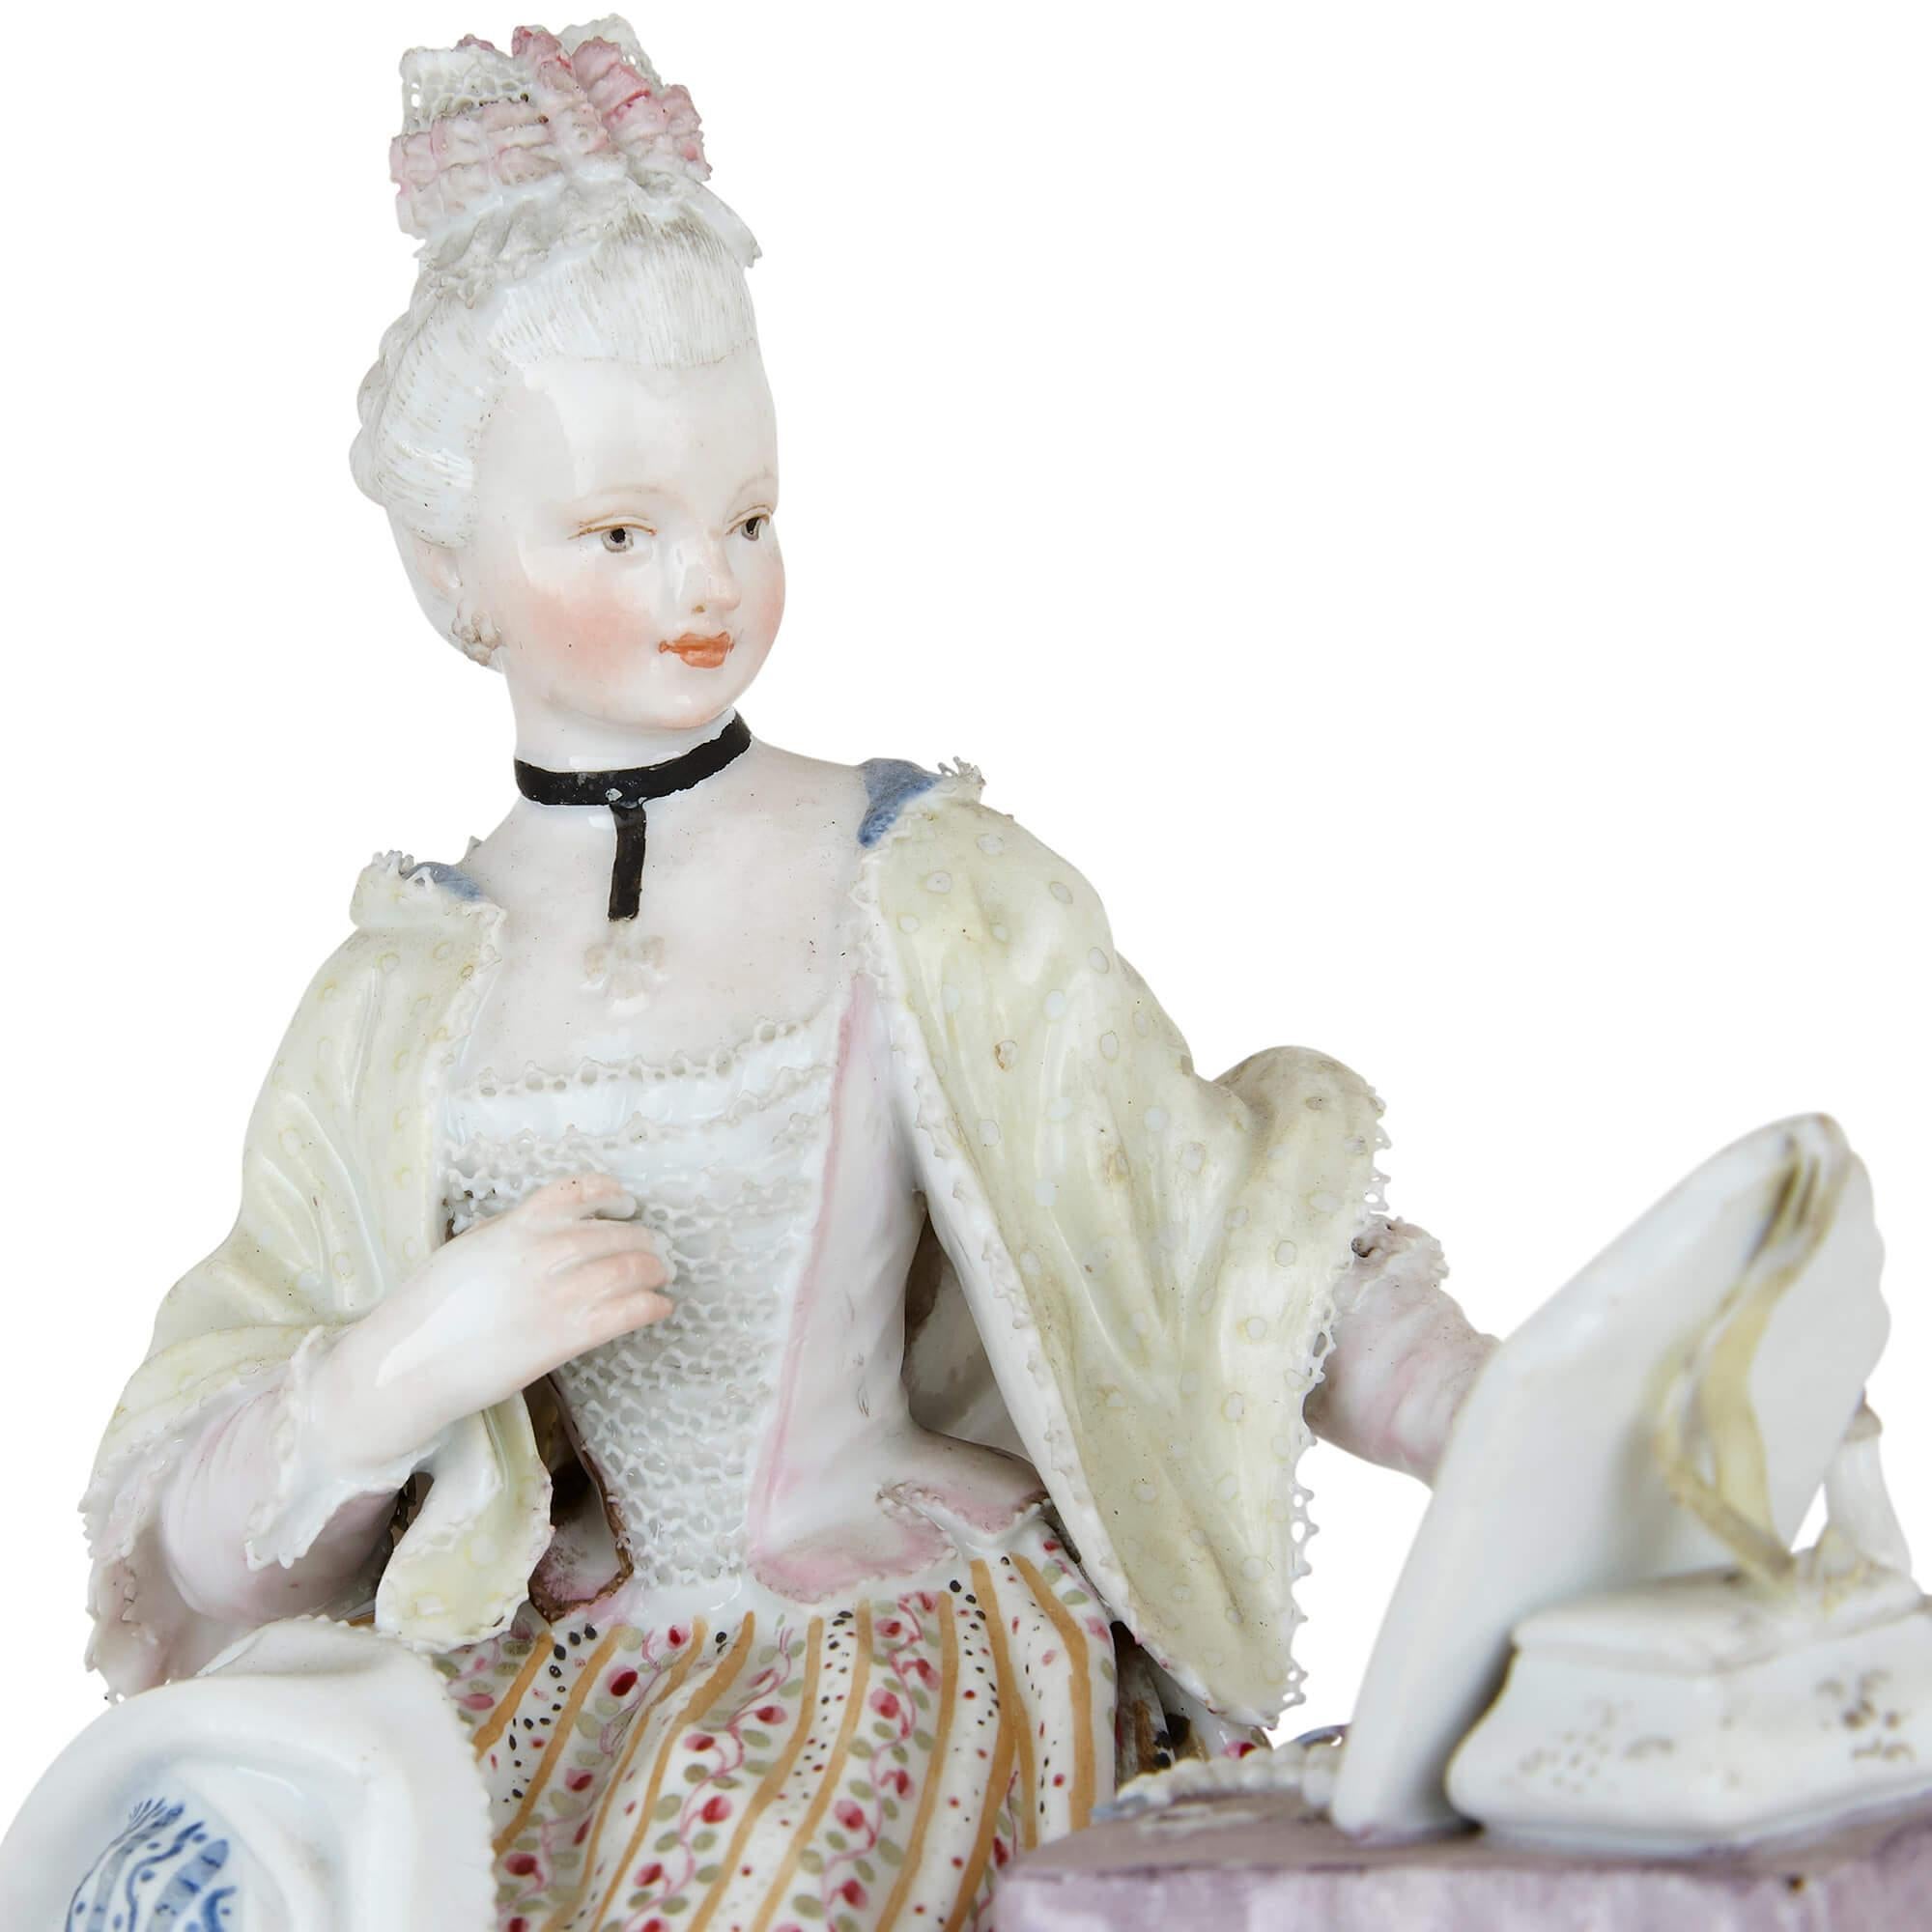 German Rococo style porcelain figure of a woman by Meissen